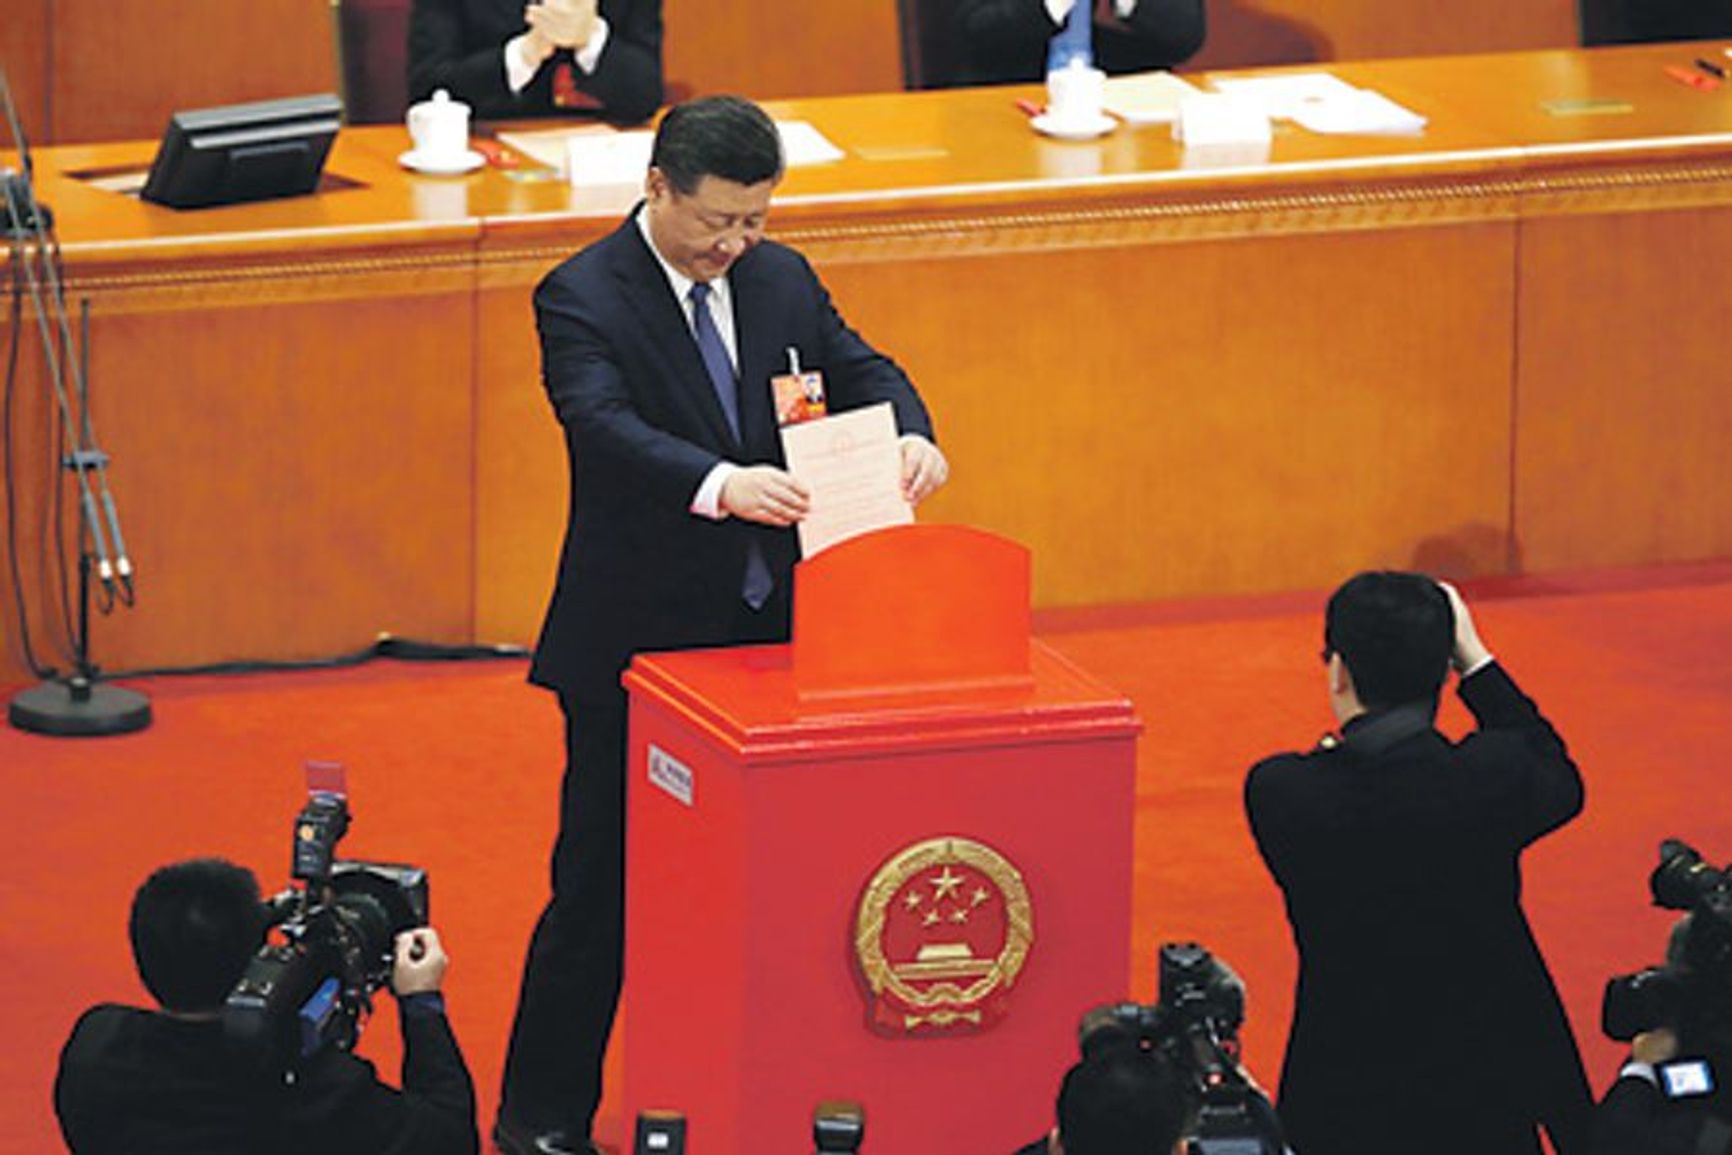 PRC President votes on constitutional amendments, 2018